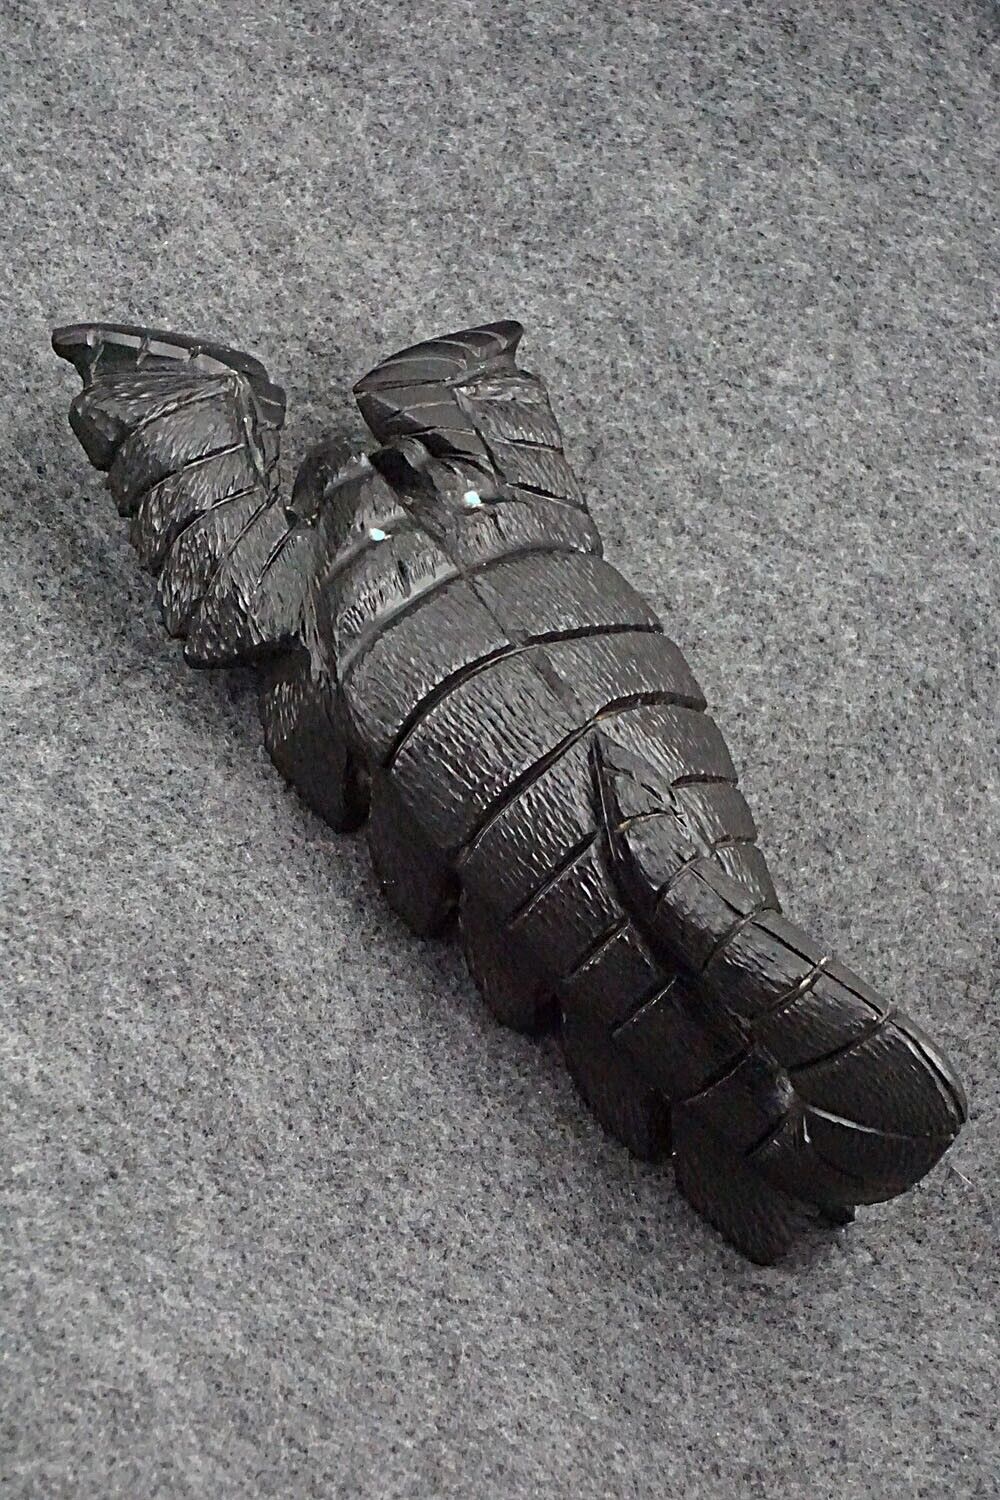 Giant Scorpion Zuni Fetish Carving - Tony Mackel